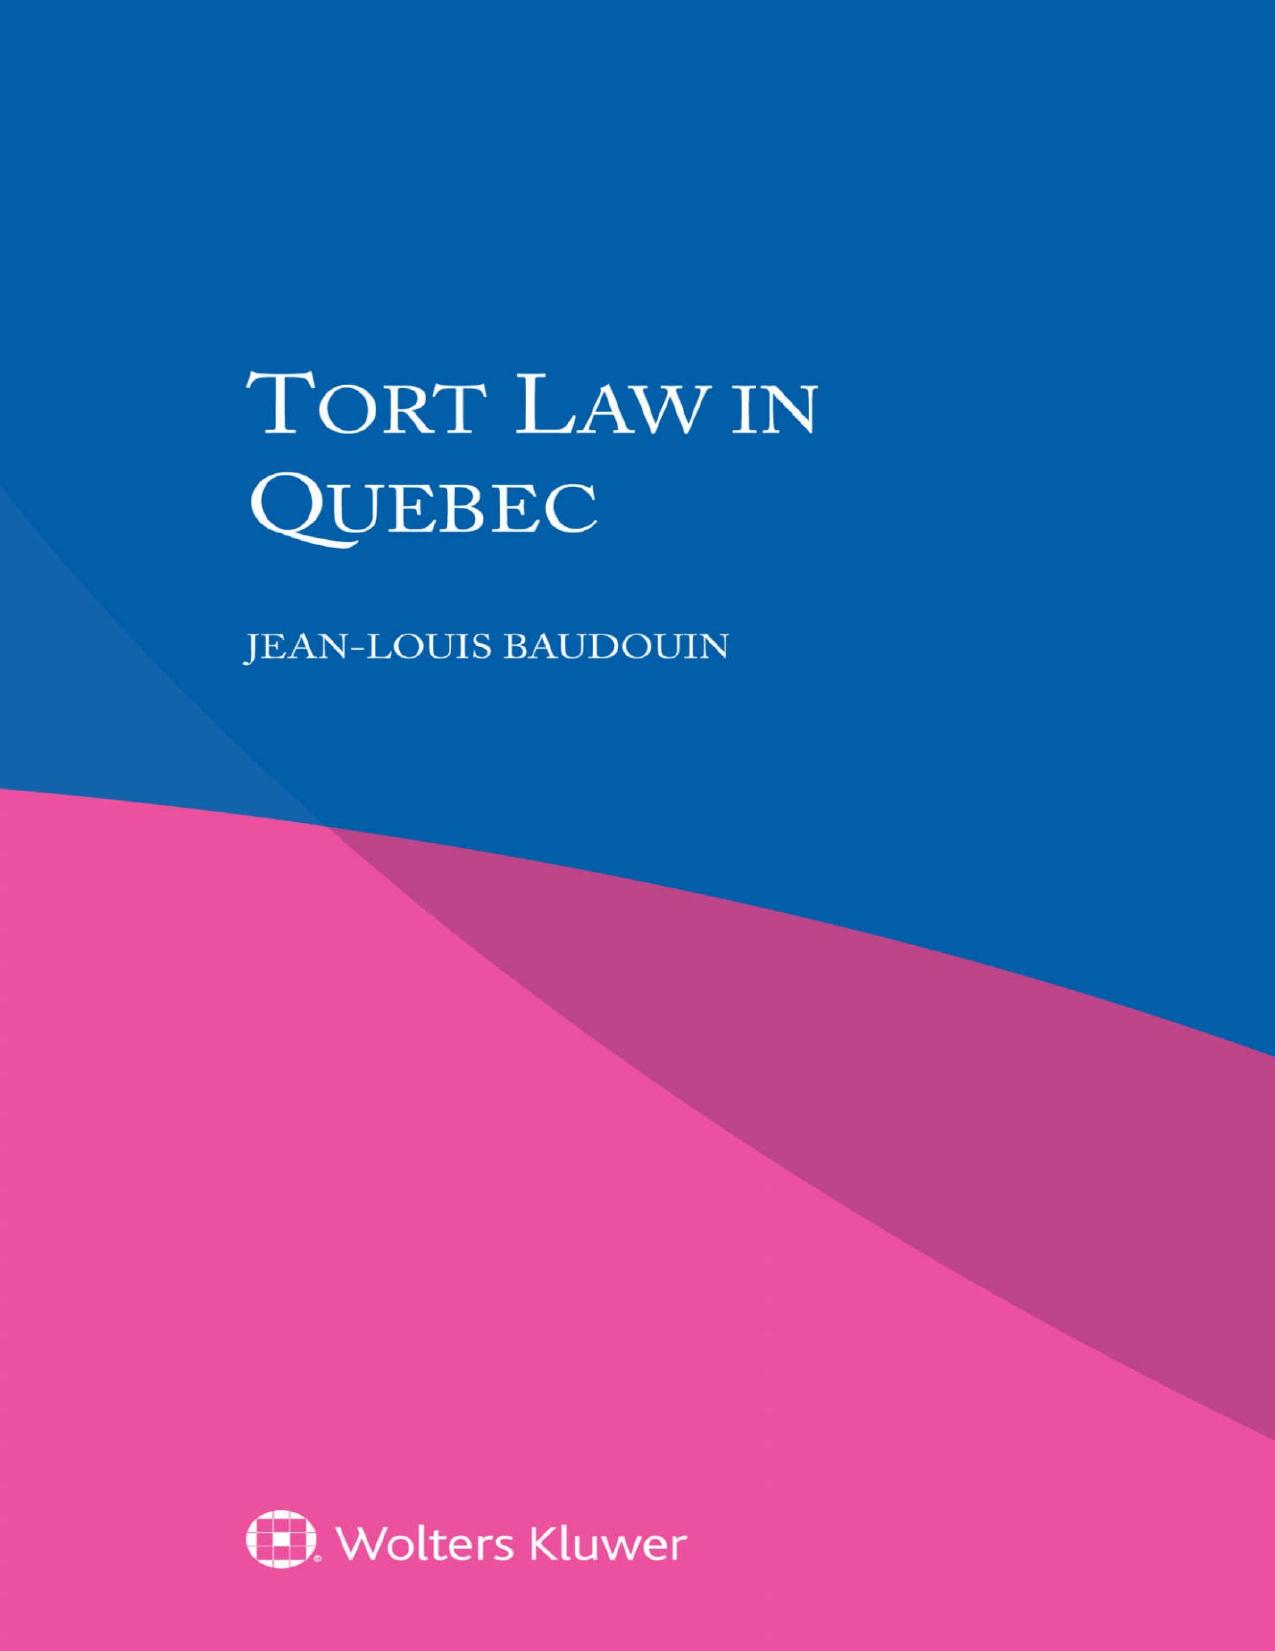 Tort Law in Quebec  by Jean-Louis Baudouin